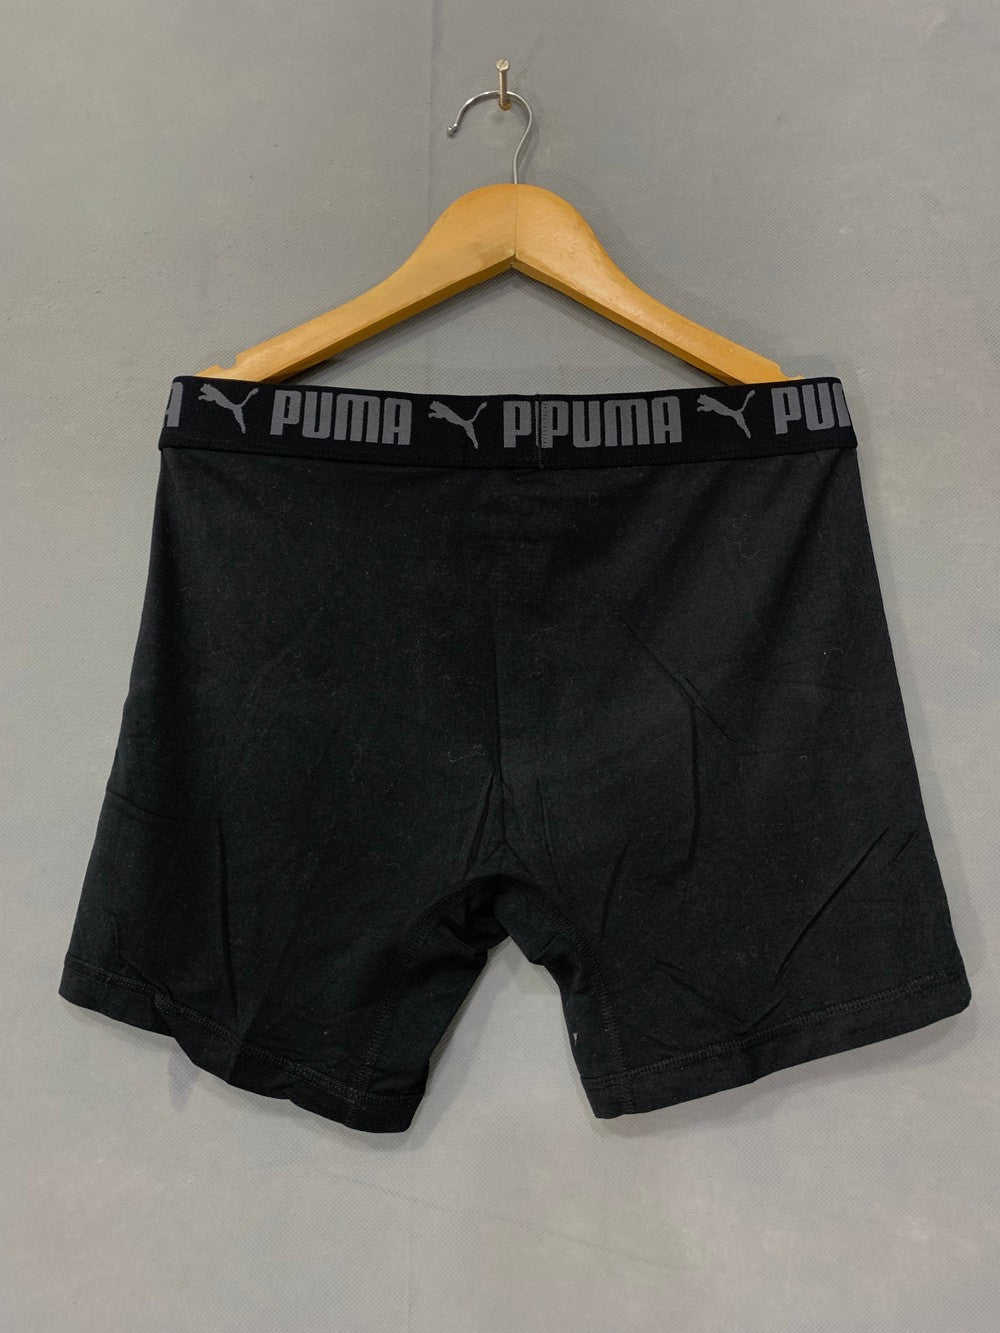 Puma Original Branded Boxer Underwear For Men